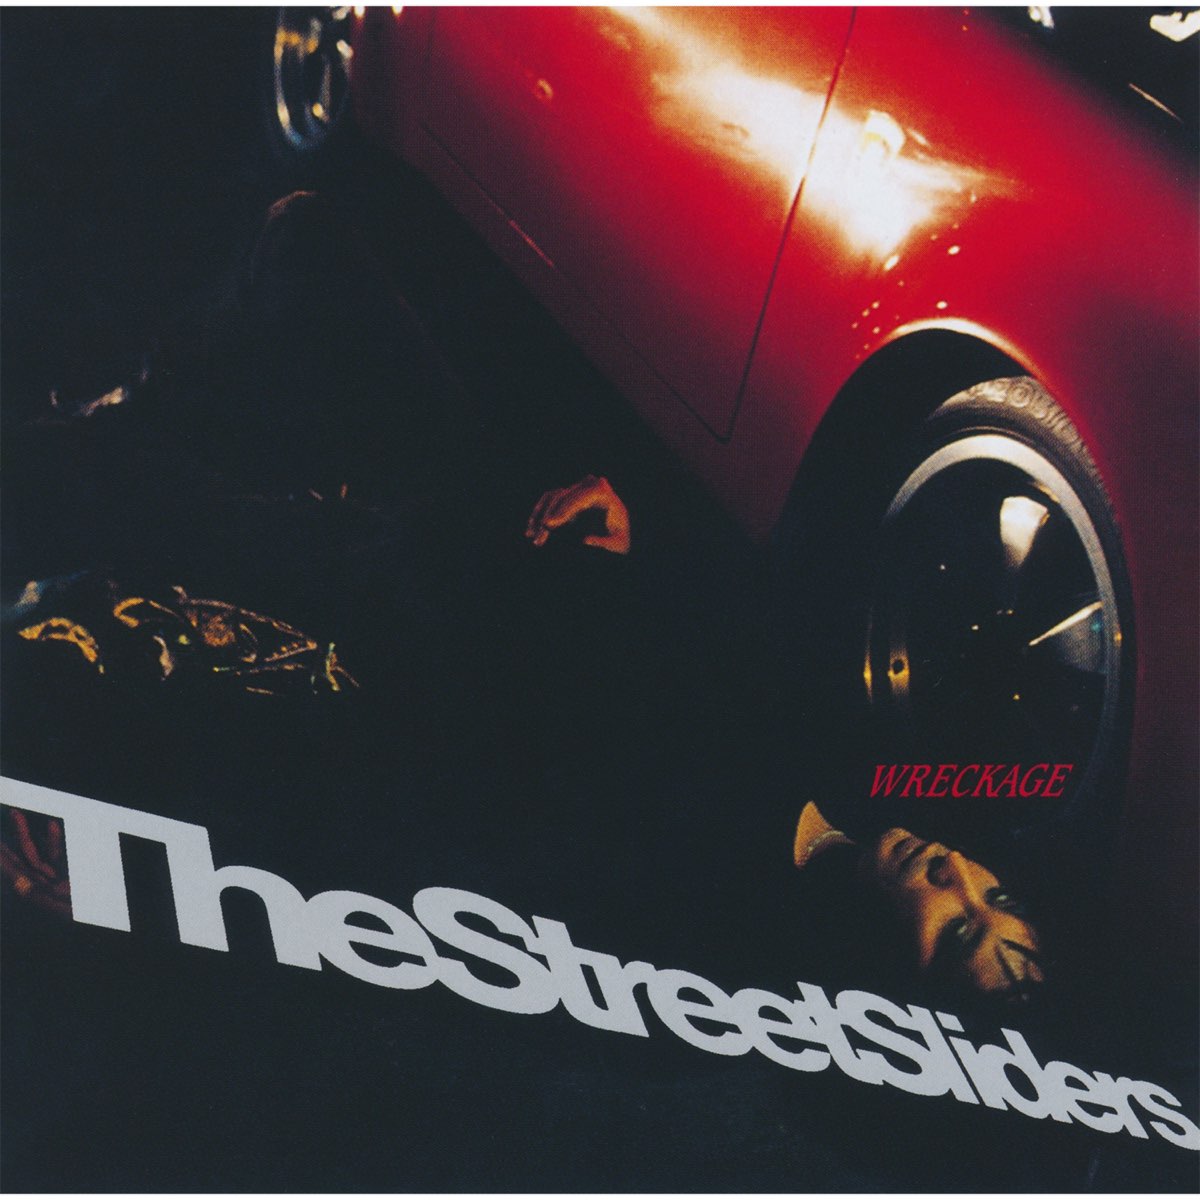 WRECKAGE - The Street Slidersのアルバム - Apple Music